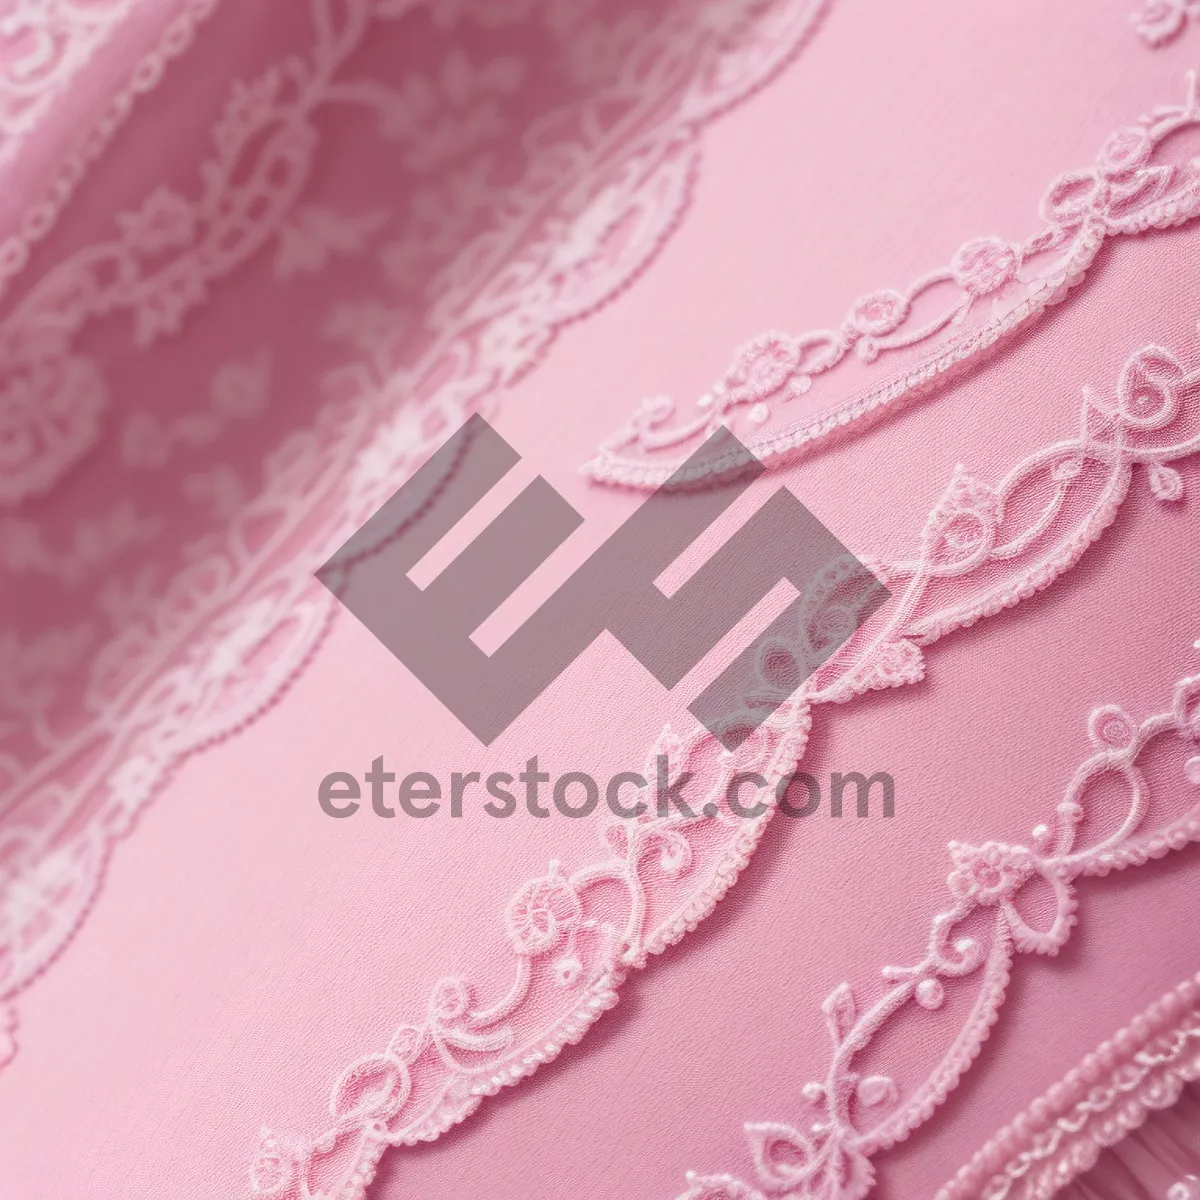 Picture of Floral Pink Pattern Design - Vintage Japanese-inspired Decorative Art